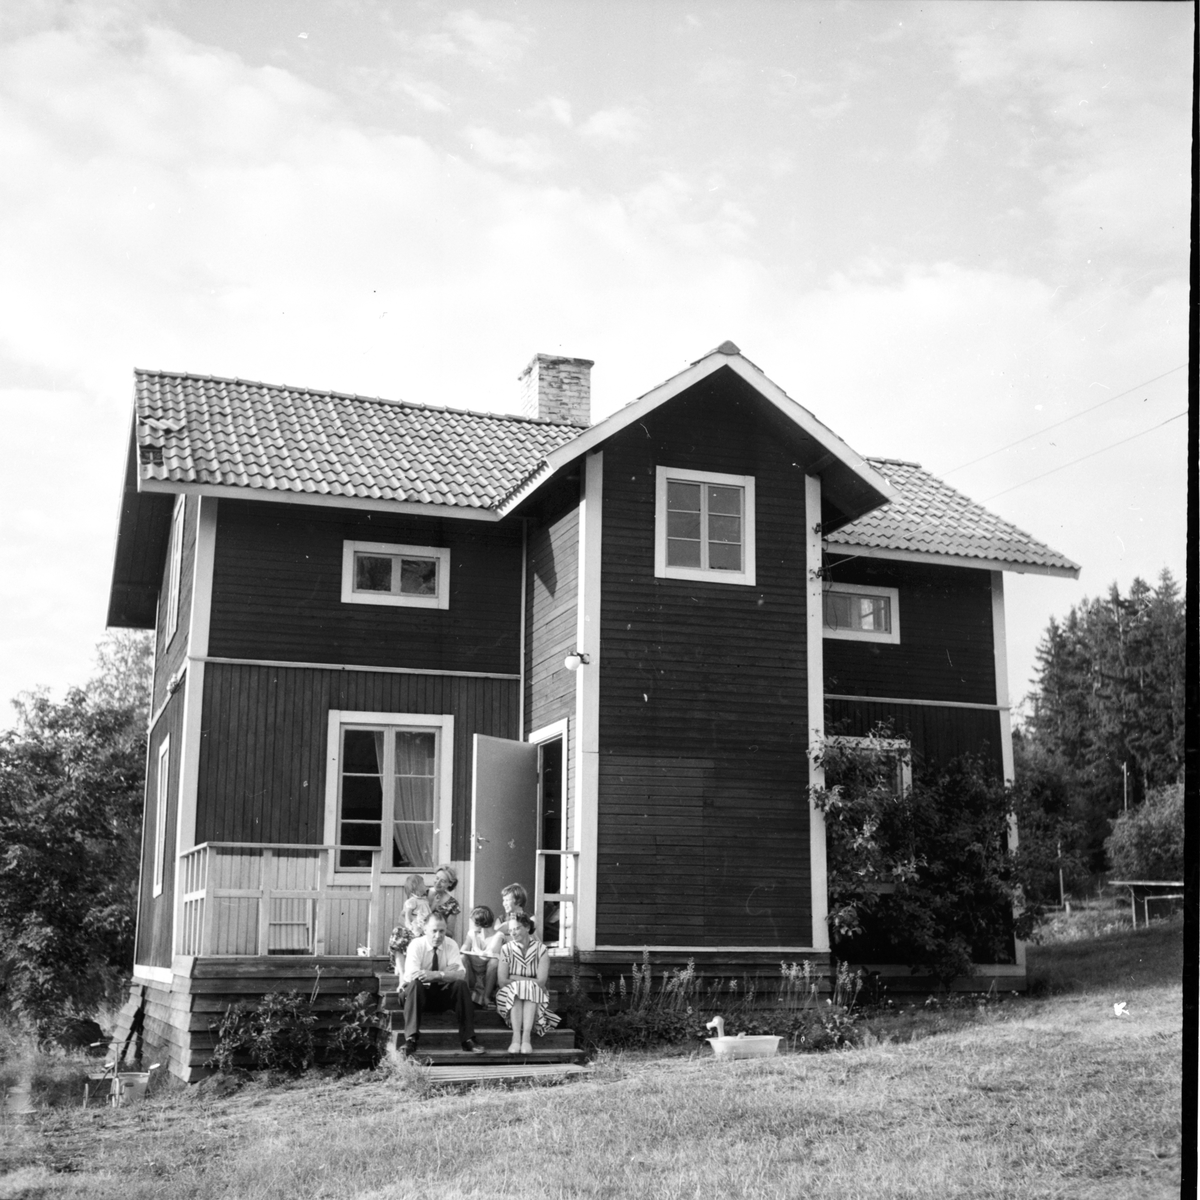 Belse Hanebo,
Gust. Nordanås torp rustas,
20 juli 1959